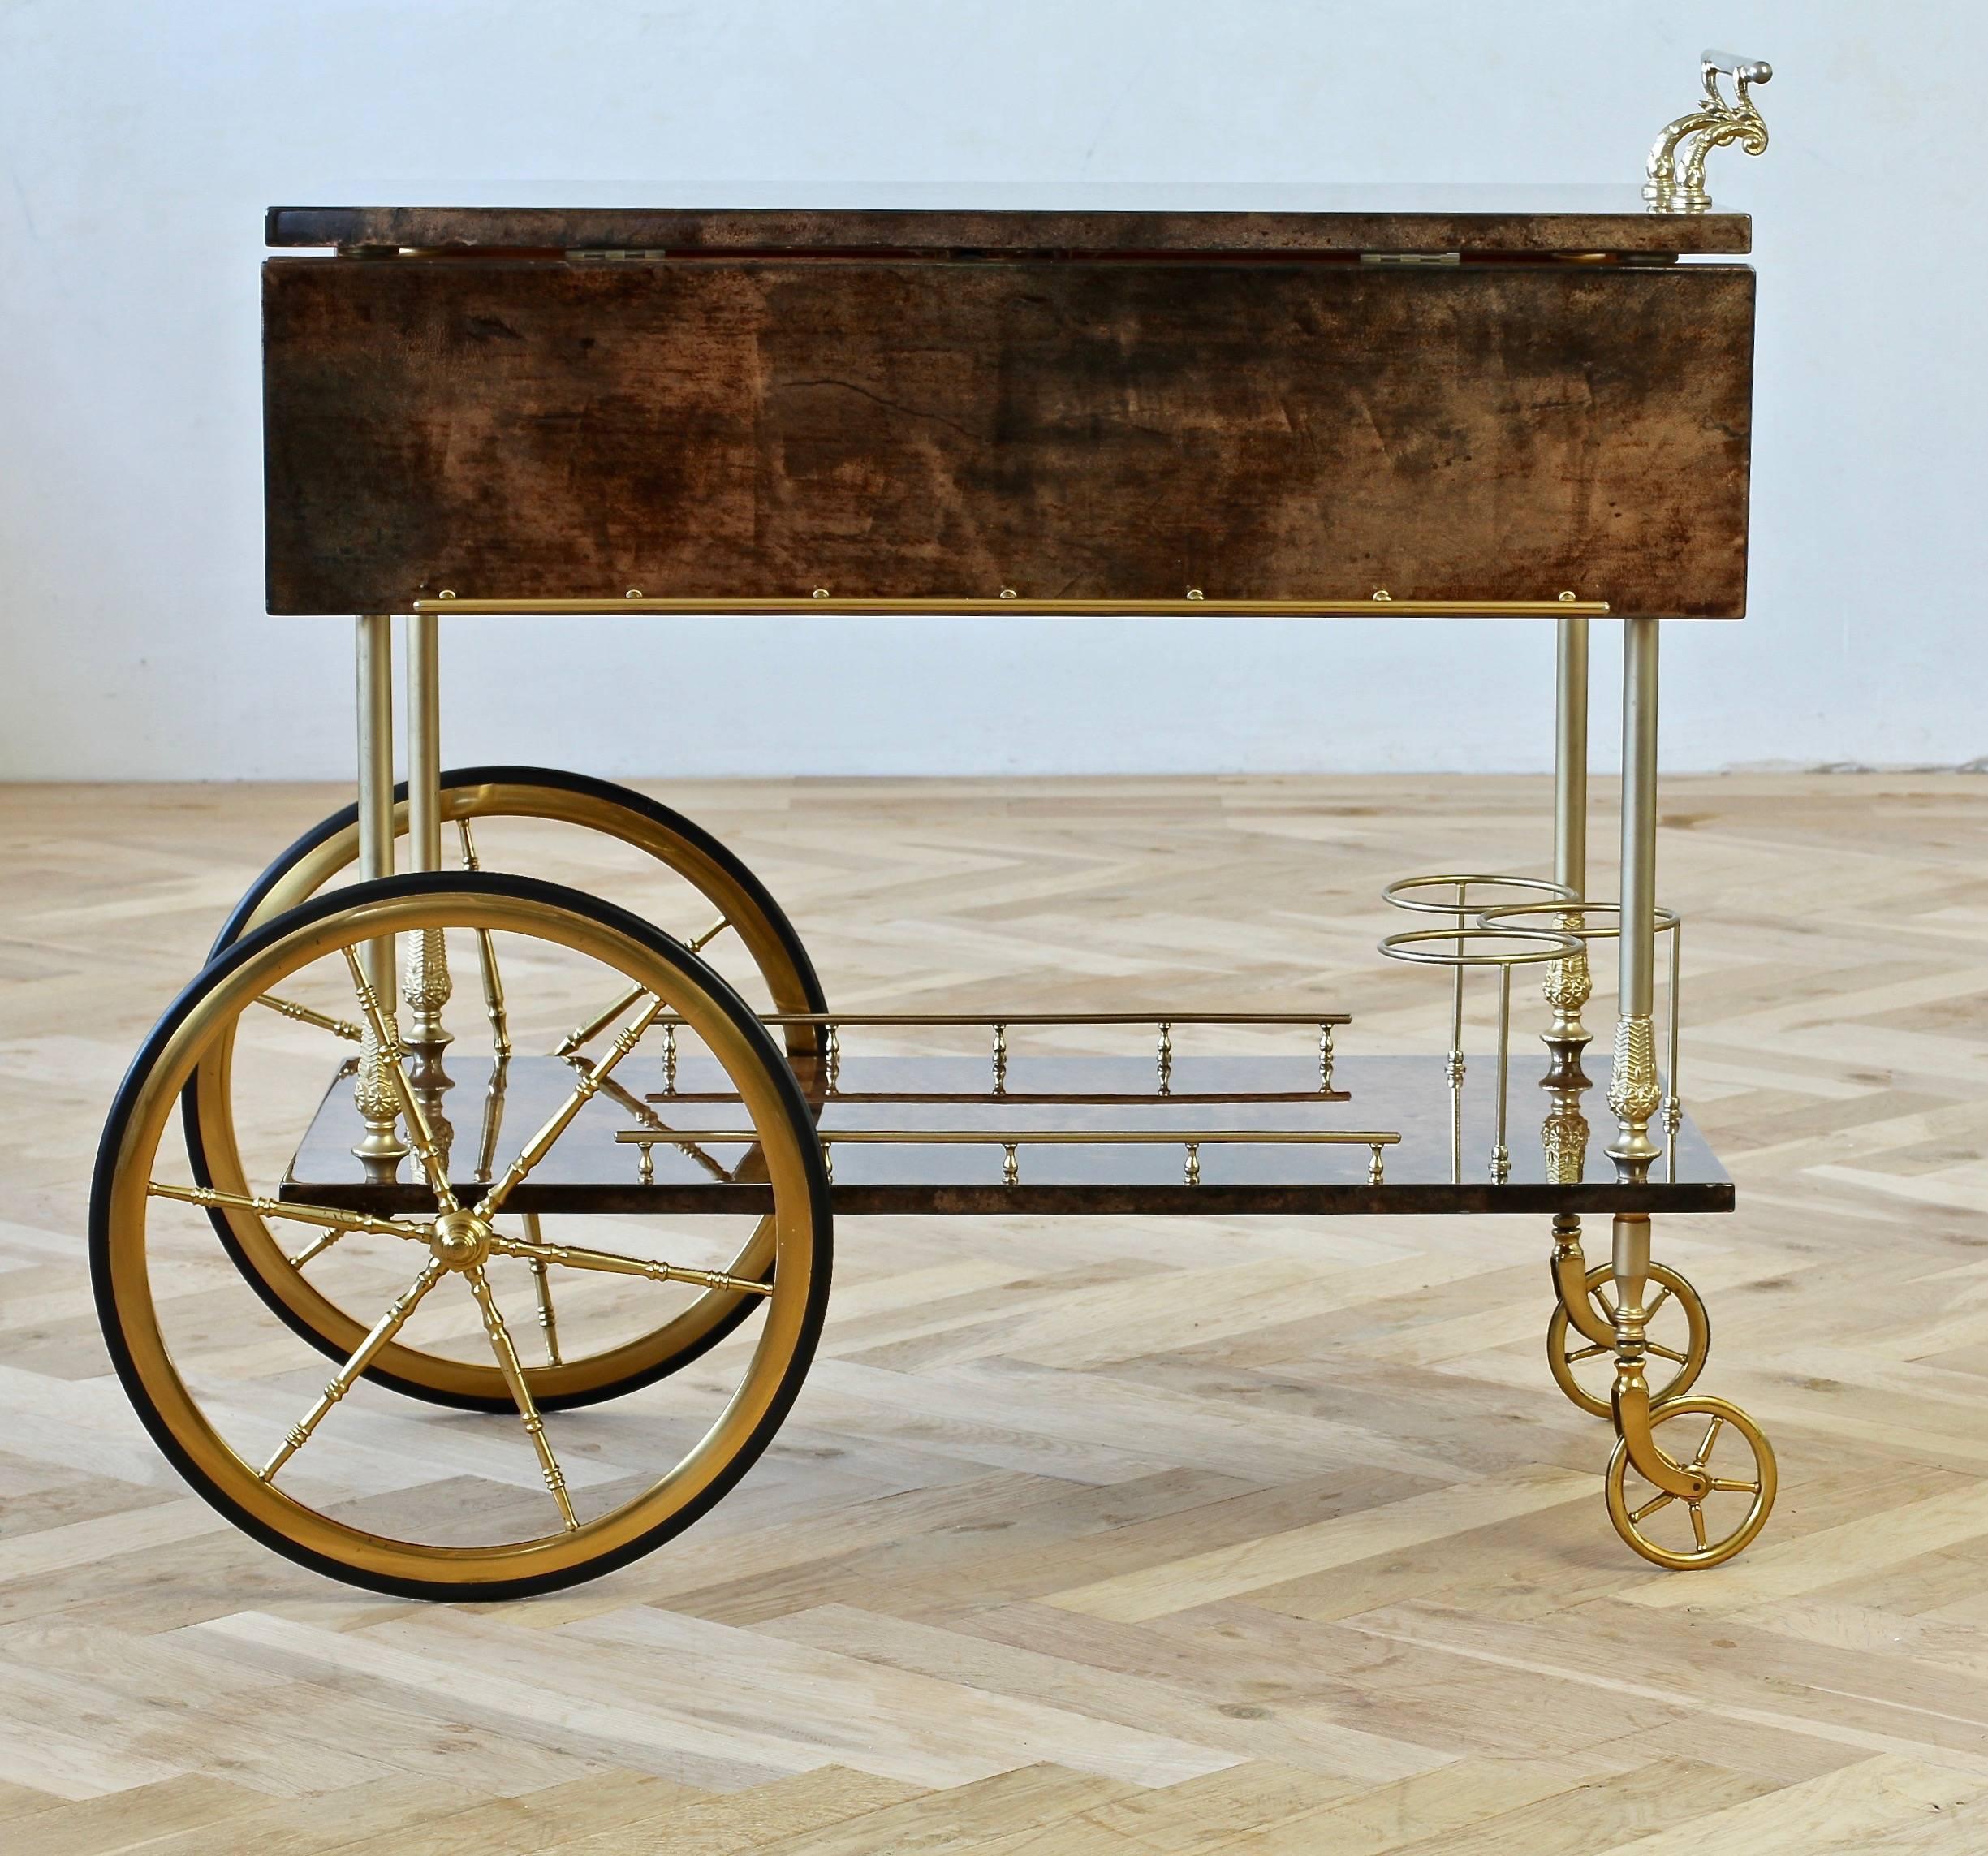 Metal Aldo Tura 1950s Bar Cart, Tea Trolley or Drinks Stand in Brown Italian Leather